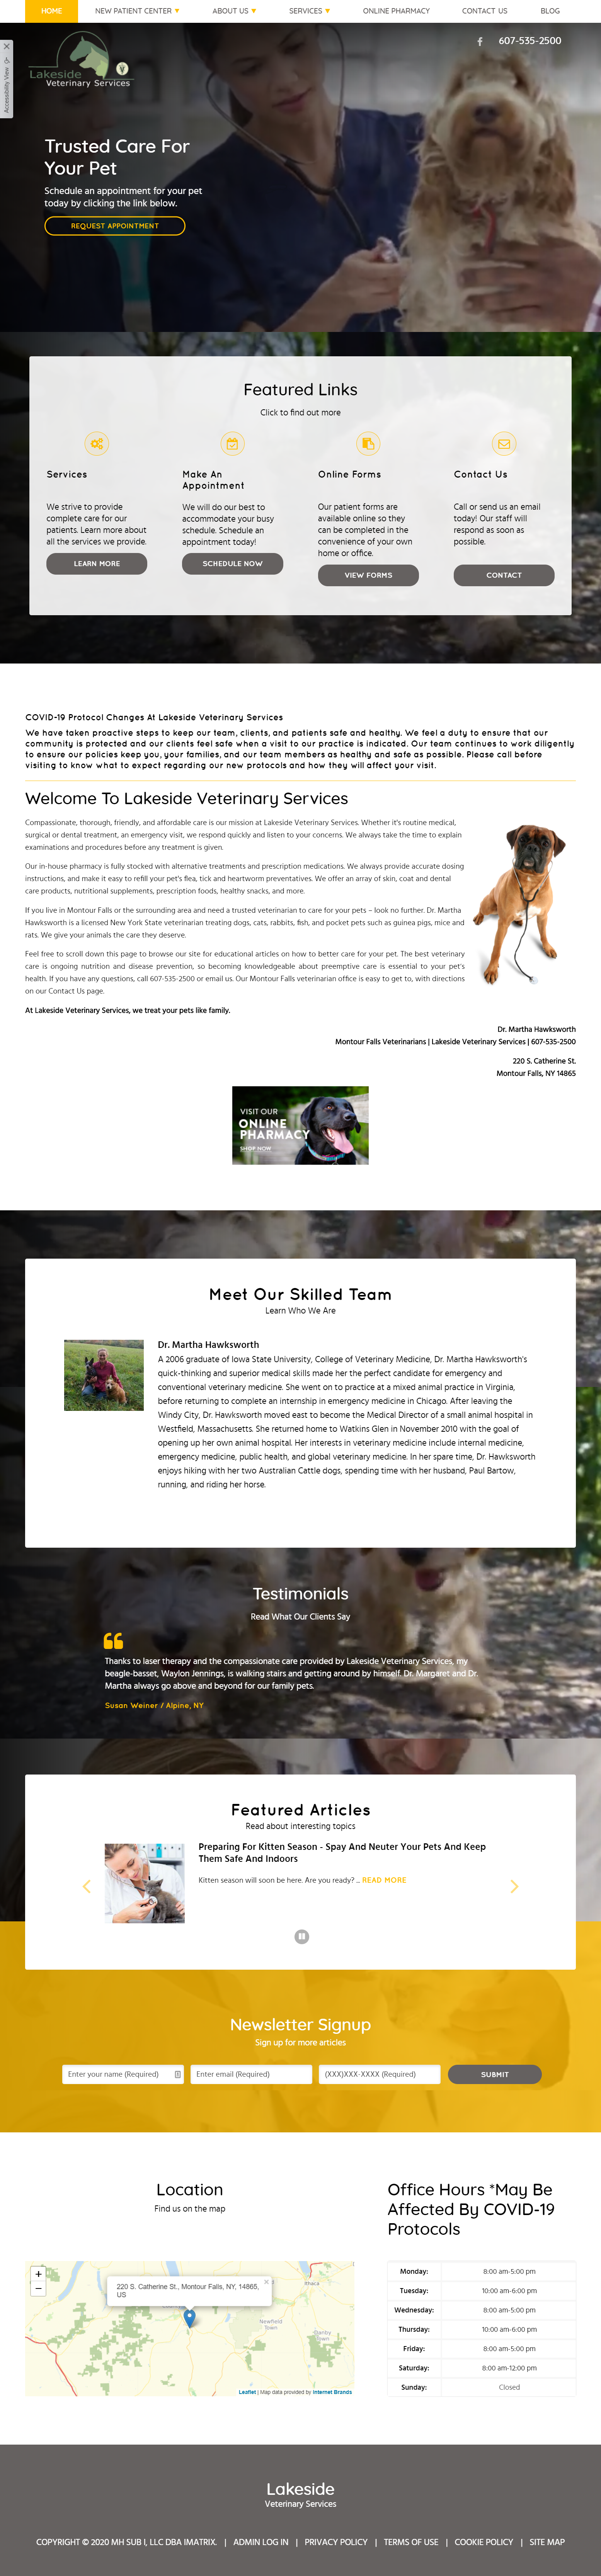 lakeside-veterinary-services-full-site